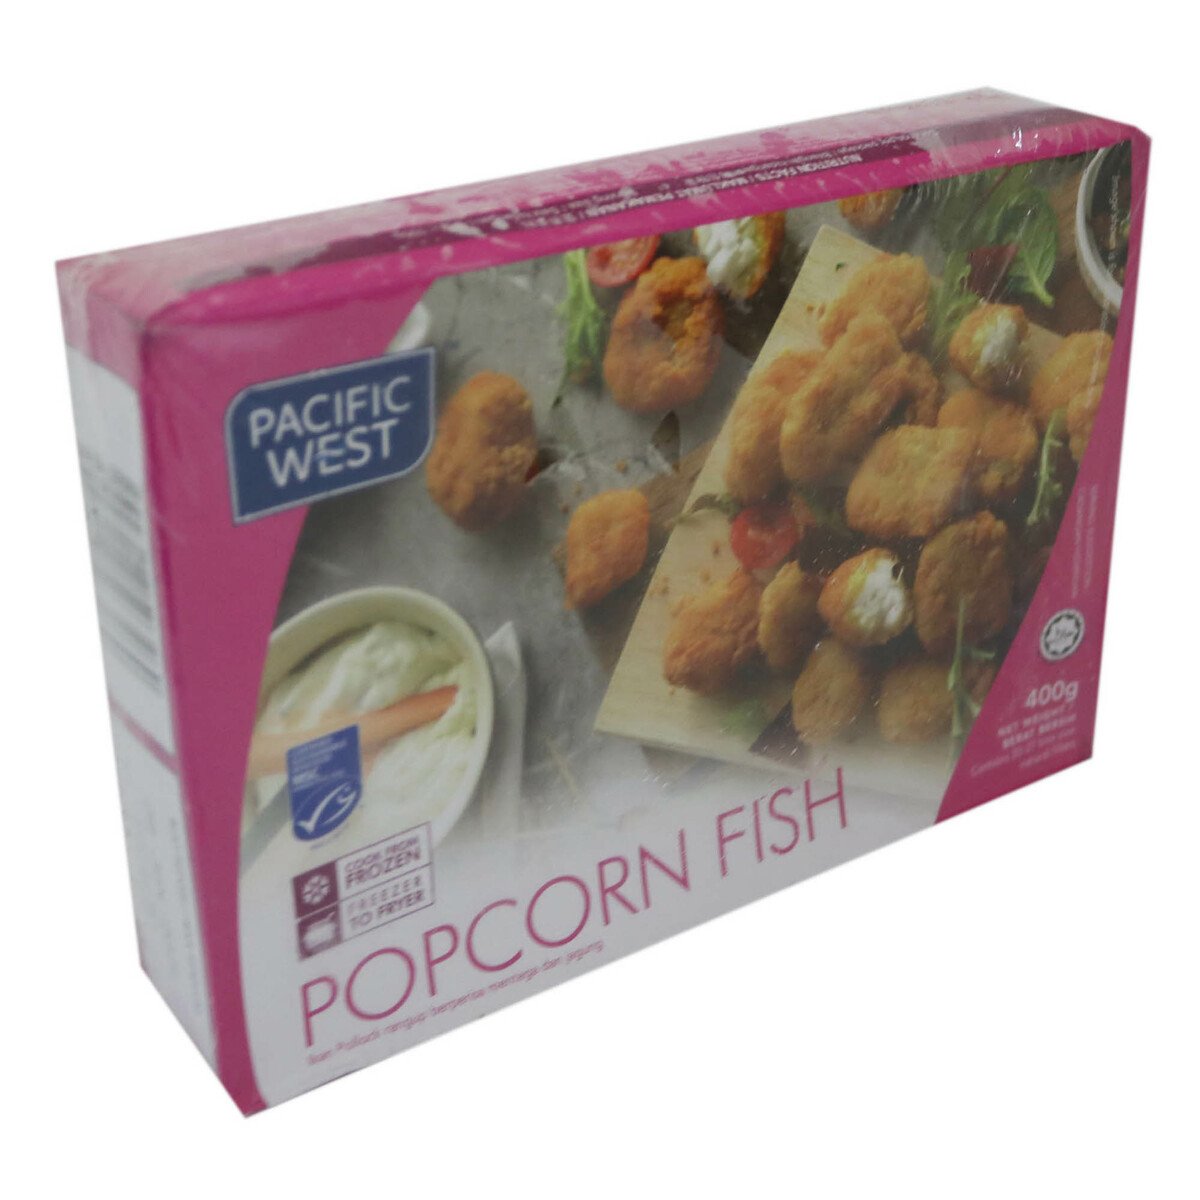 Pacific West Popcorn Fish 400g